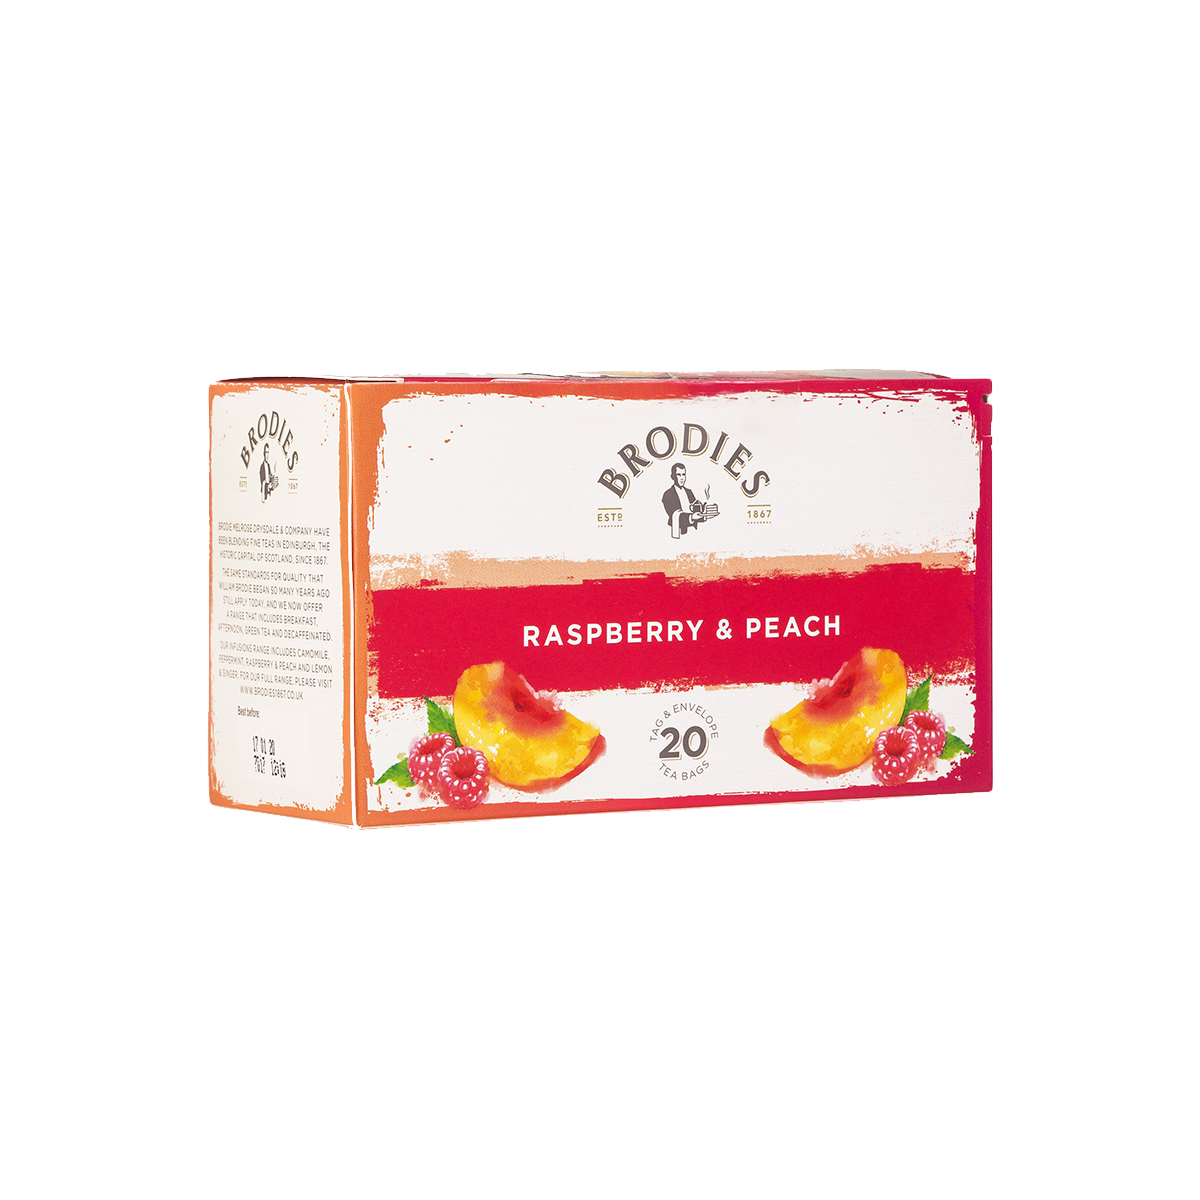 Brodies - Raspberry & Peach Tea